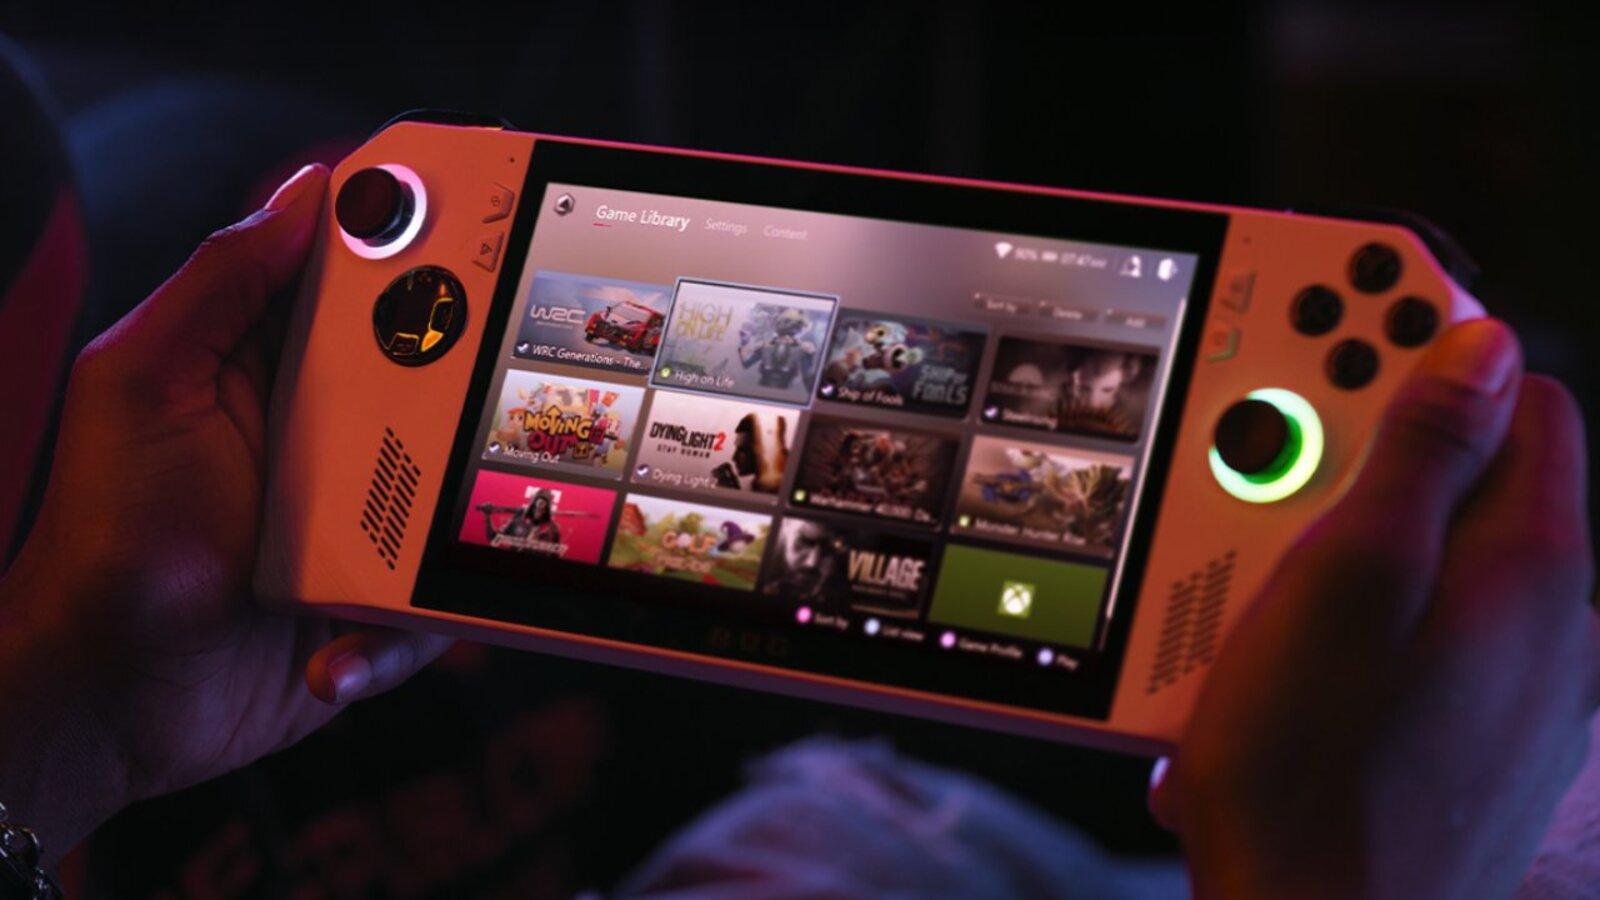 Asus ROG Ally oyun cihazı için yurt dışı fiyatı sızdırıldı